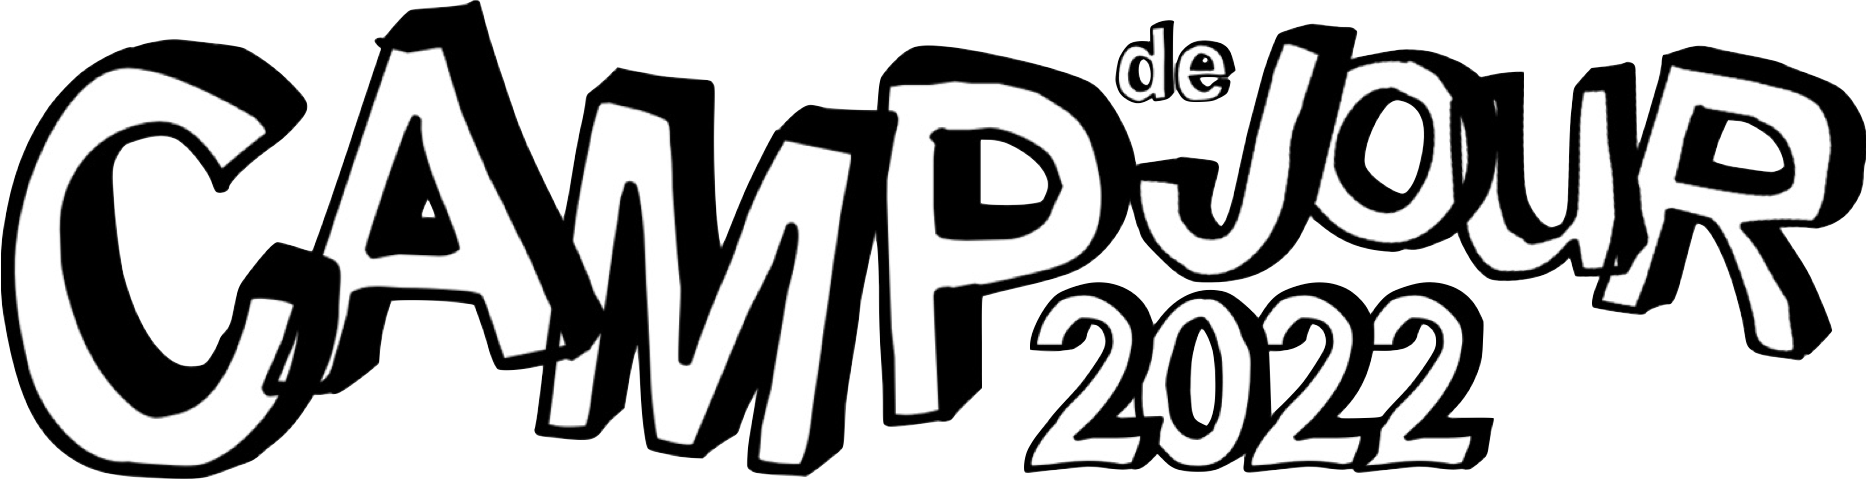 Logo CDJ regions - Portfolio Camp Jour 2022